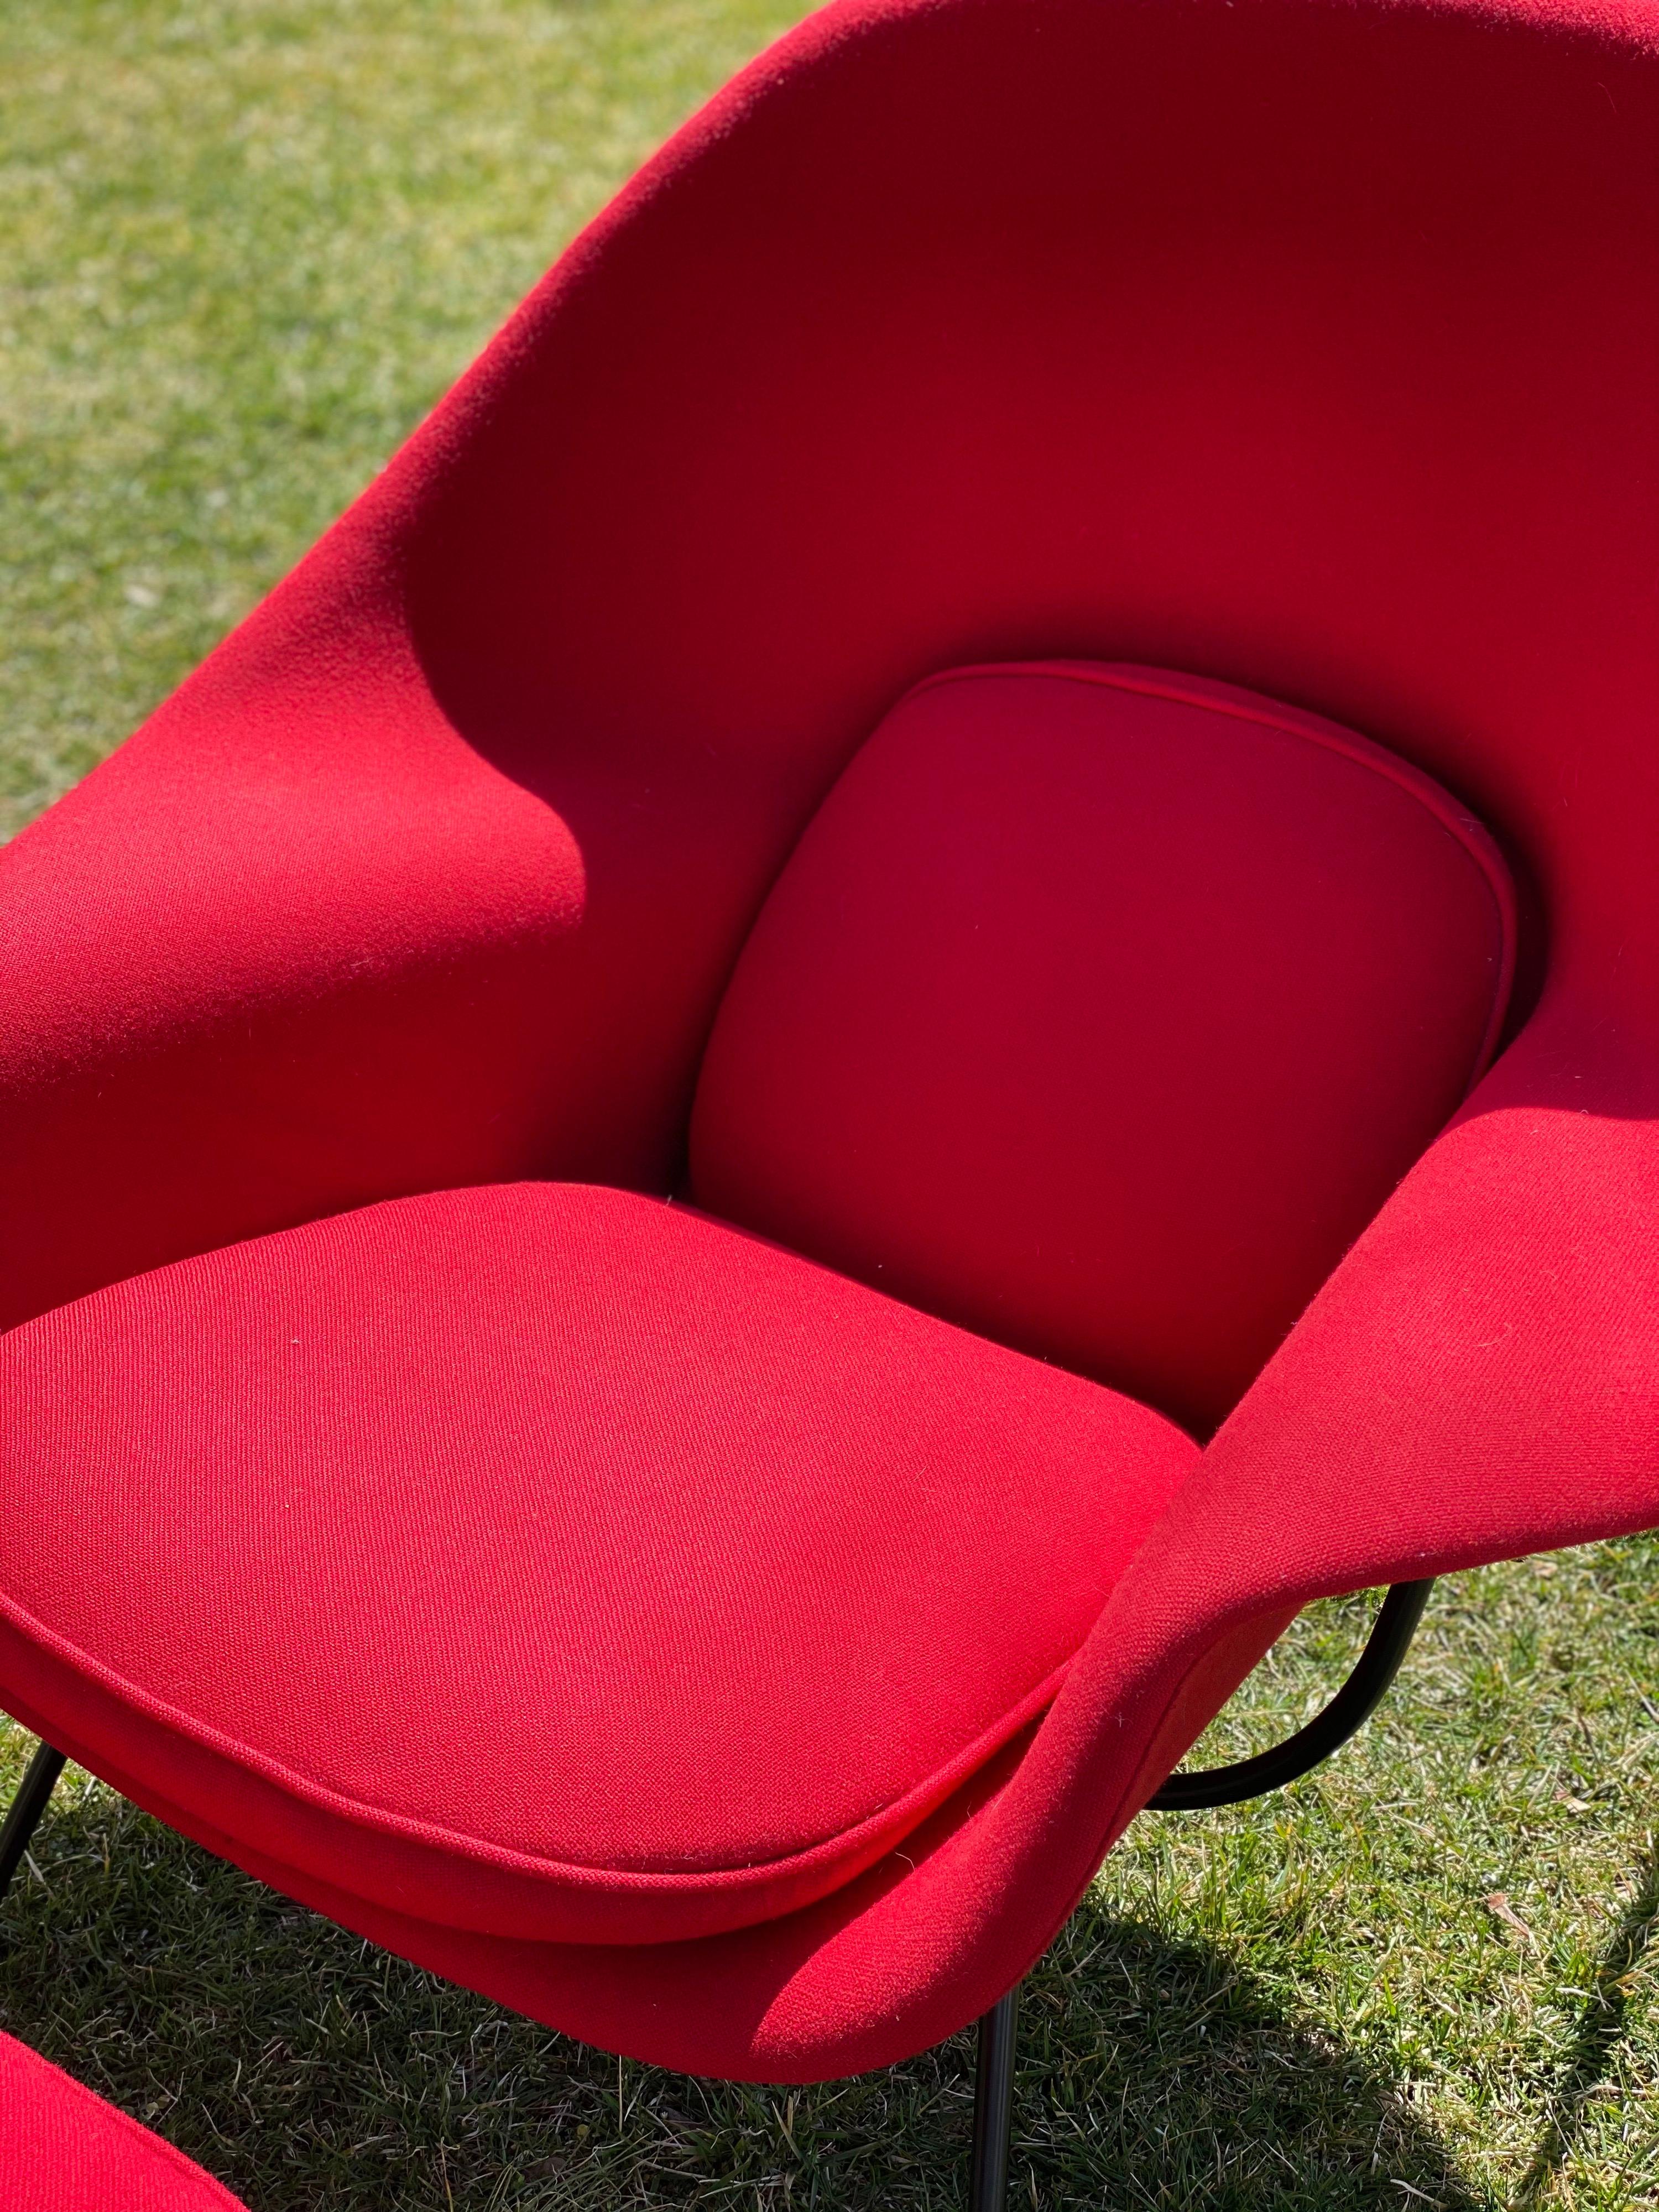 American Eero Saarinen Mid-Century Womb Chair & Ottoman by Knoll For Sale